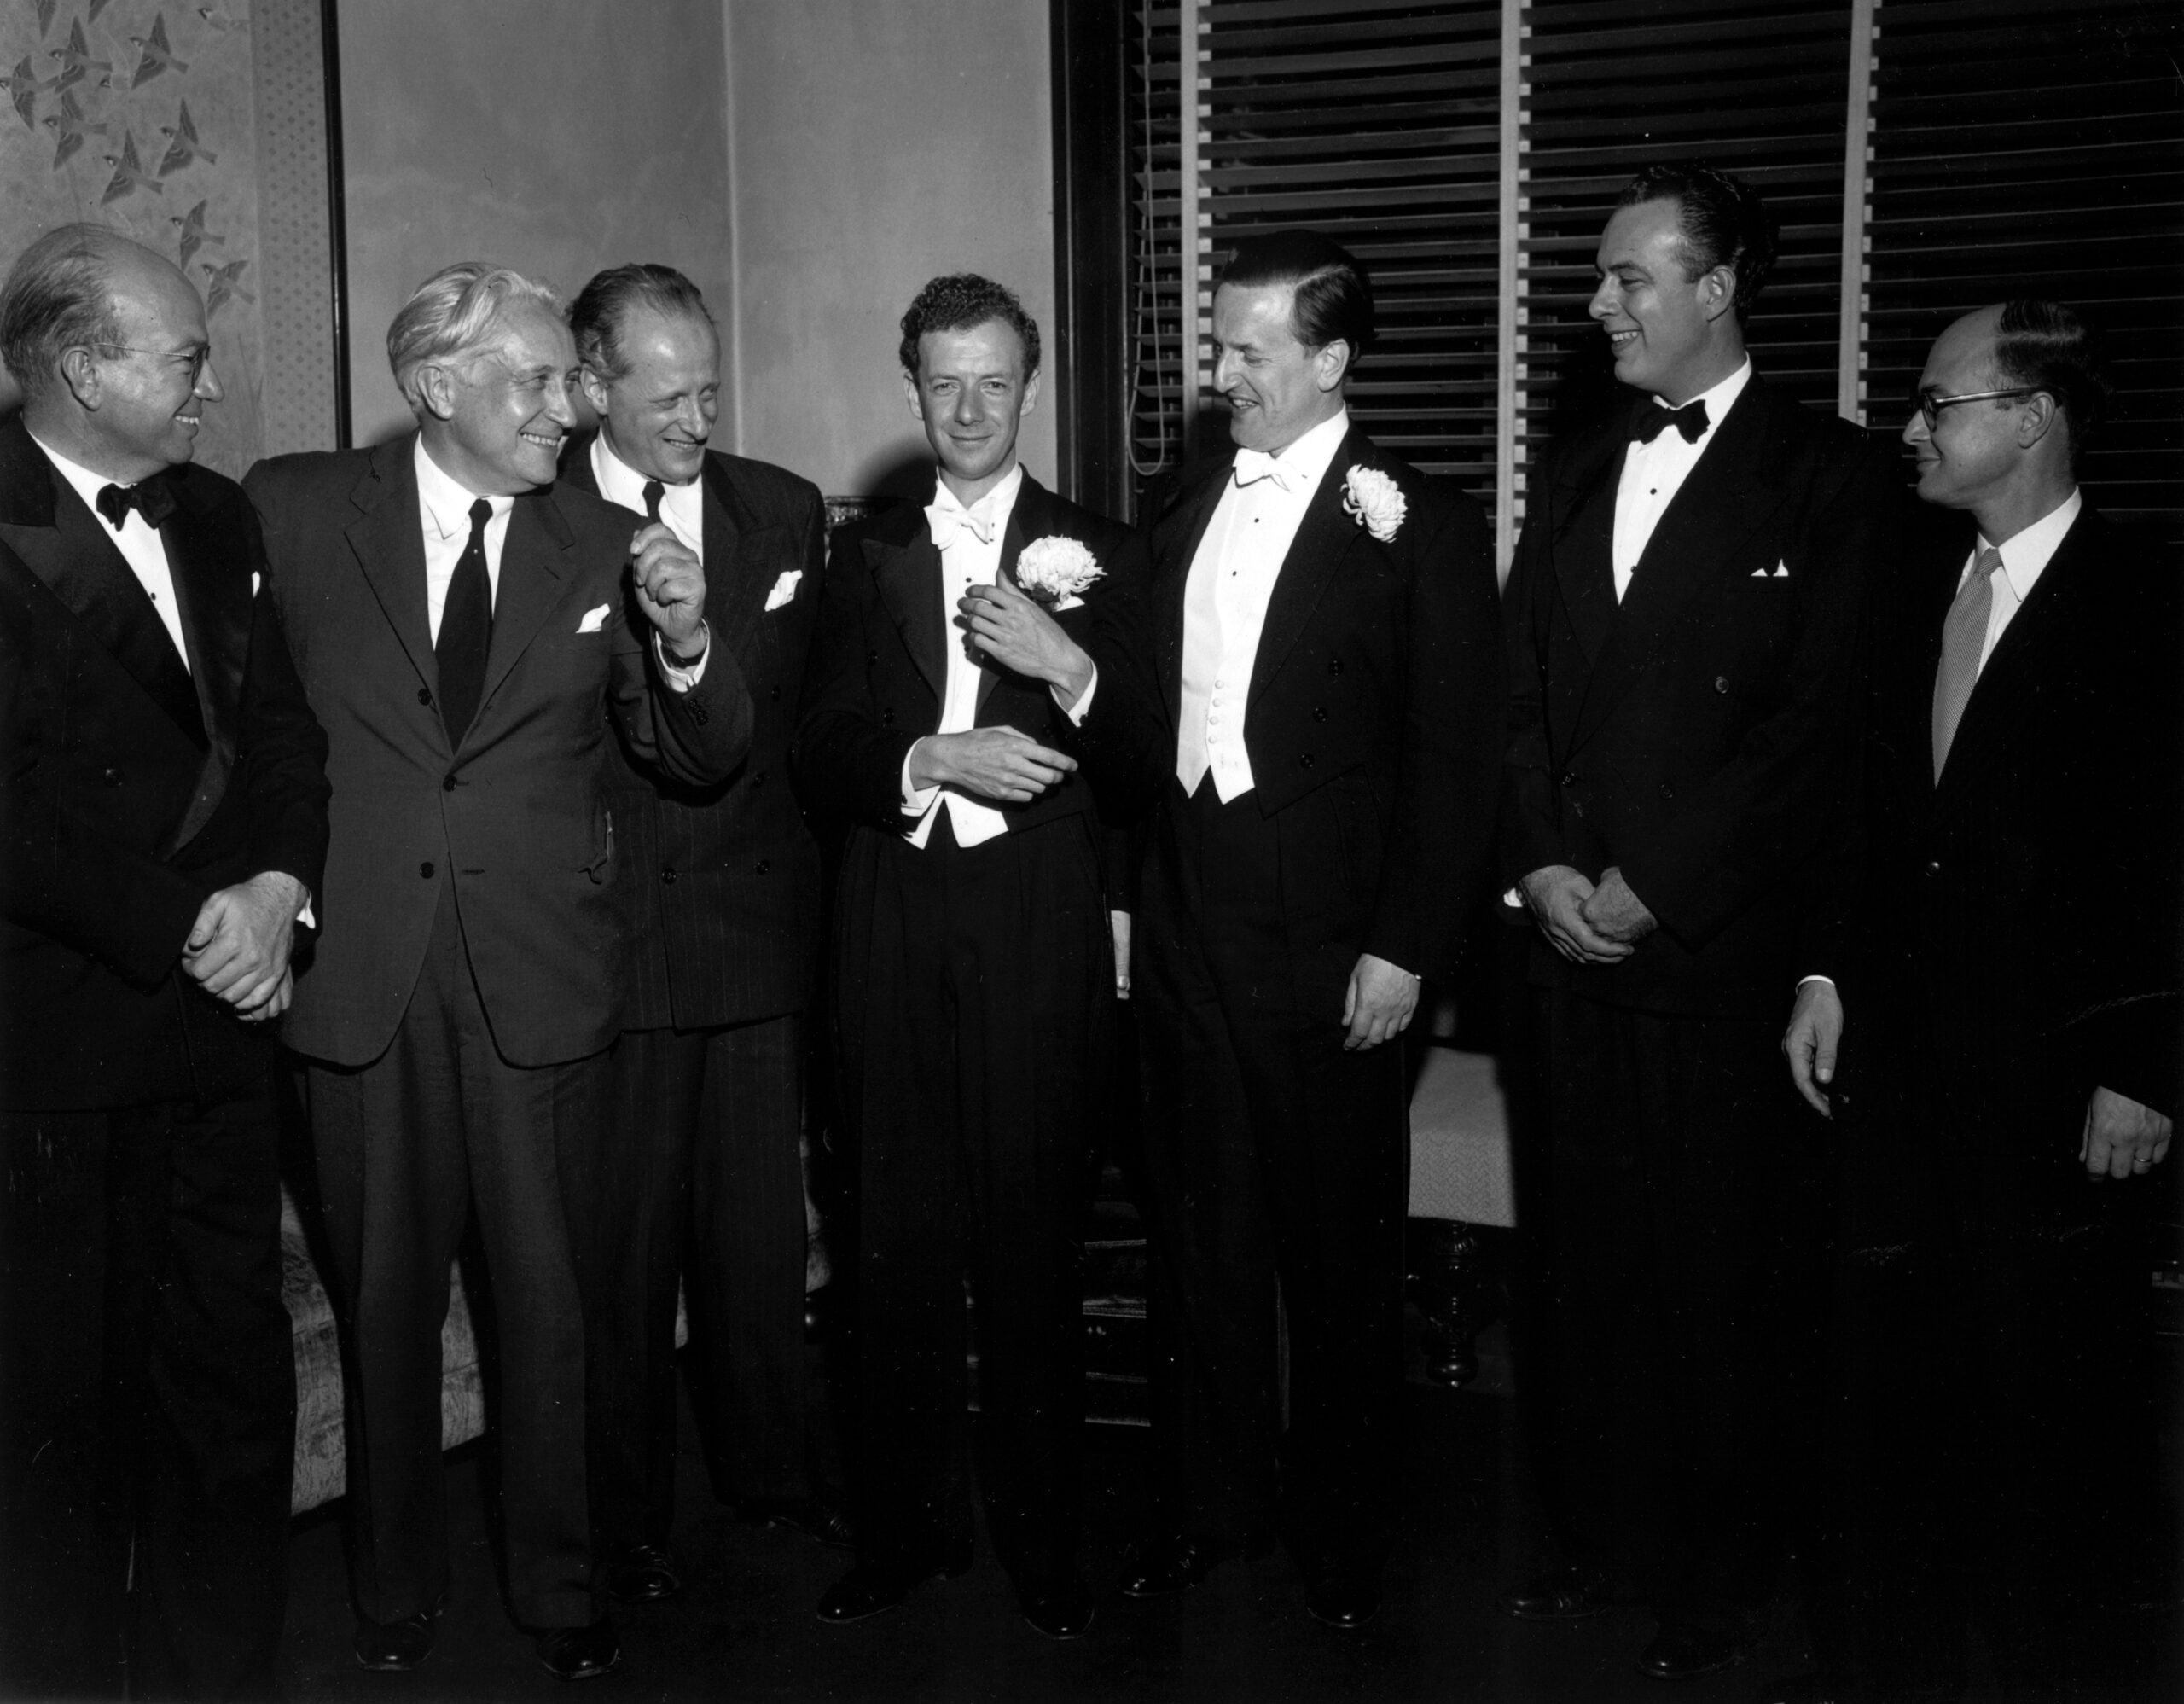 1949 - Benjamin Britten & tenor Peter Pears with Opera faculty